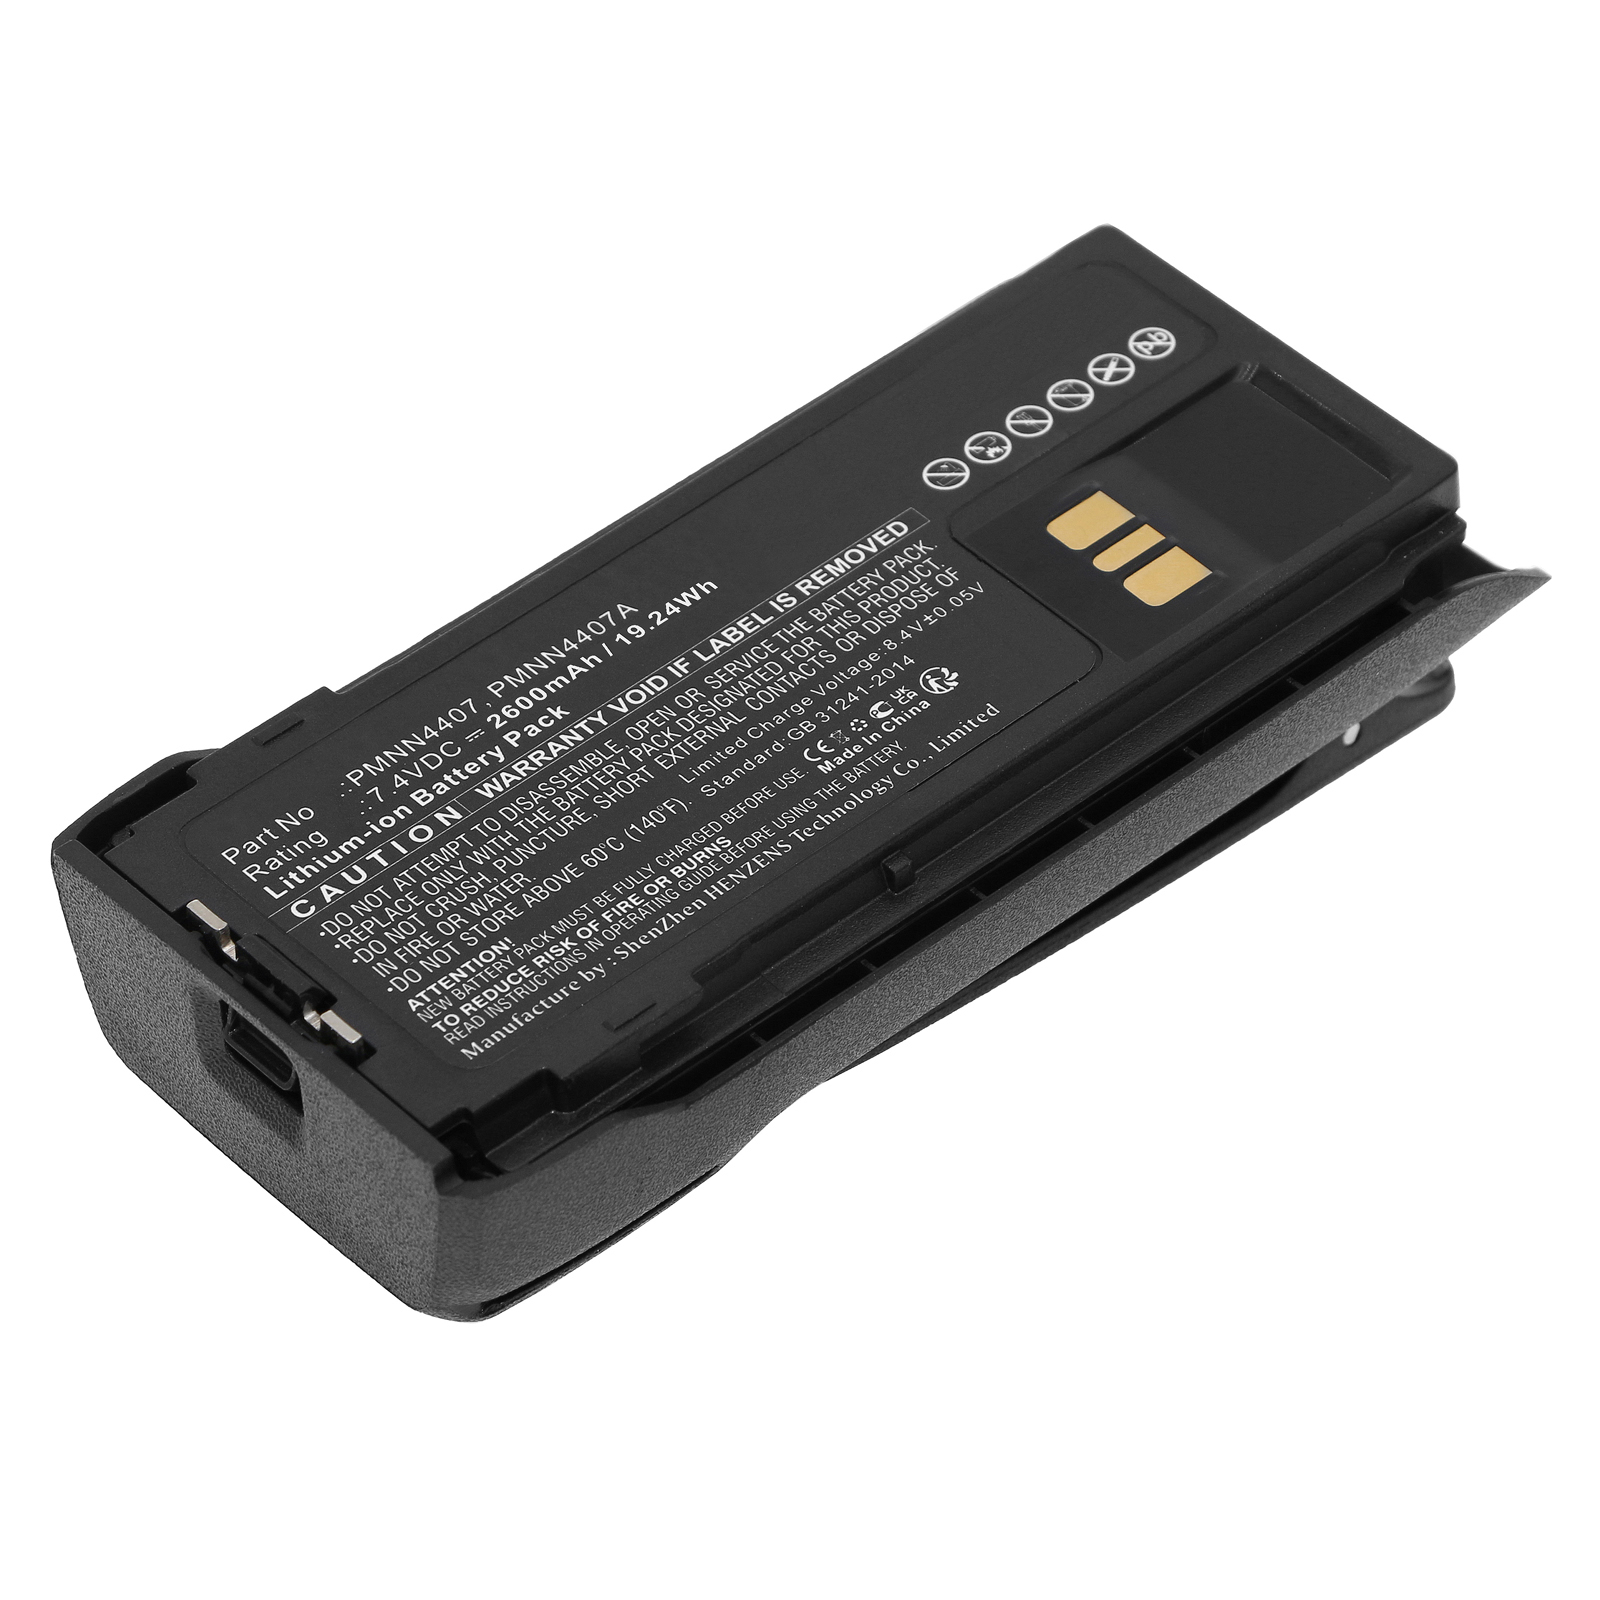 Synergy Digital 2-Way Radio Battery, Compatible with Motorola PMNN4407 2-Way Radio Battery (Li-ion, 7.4V, 2600mAh)